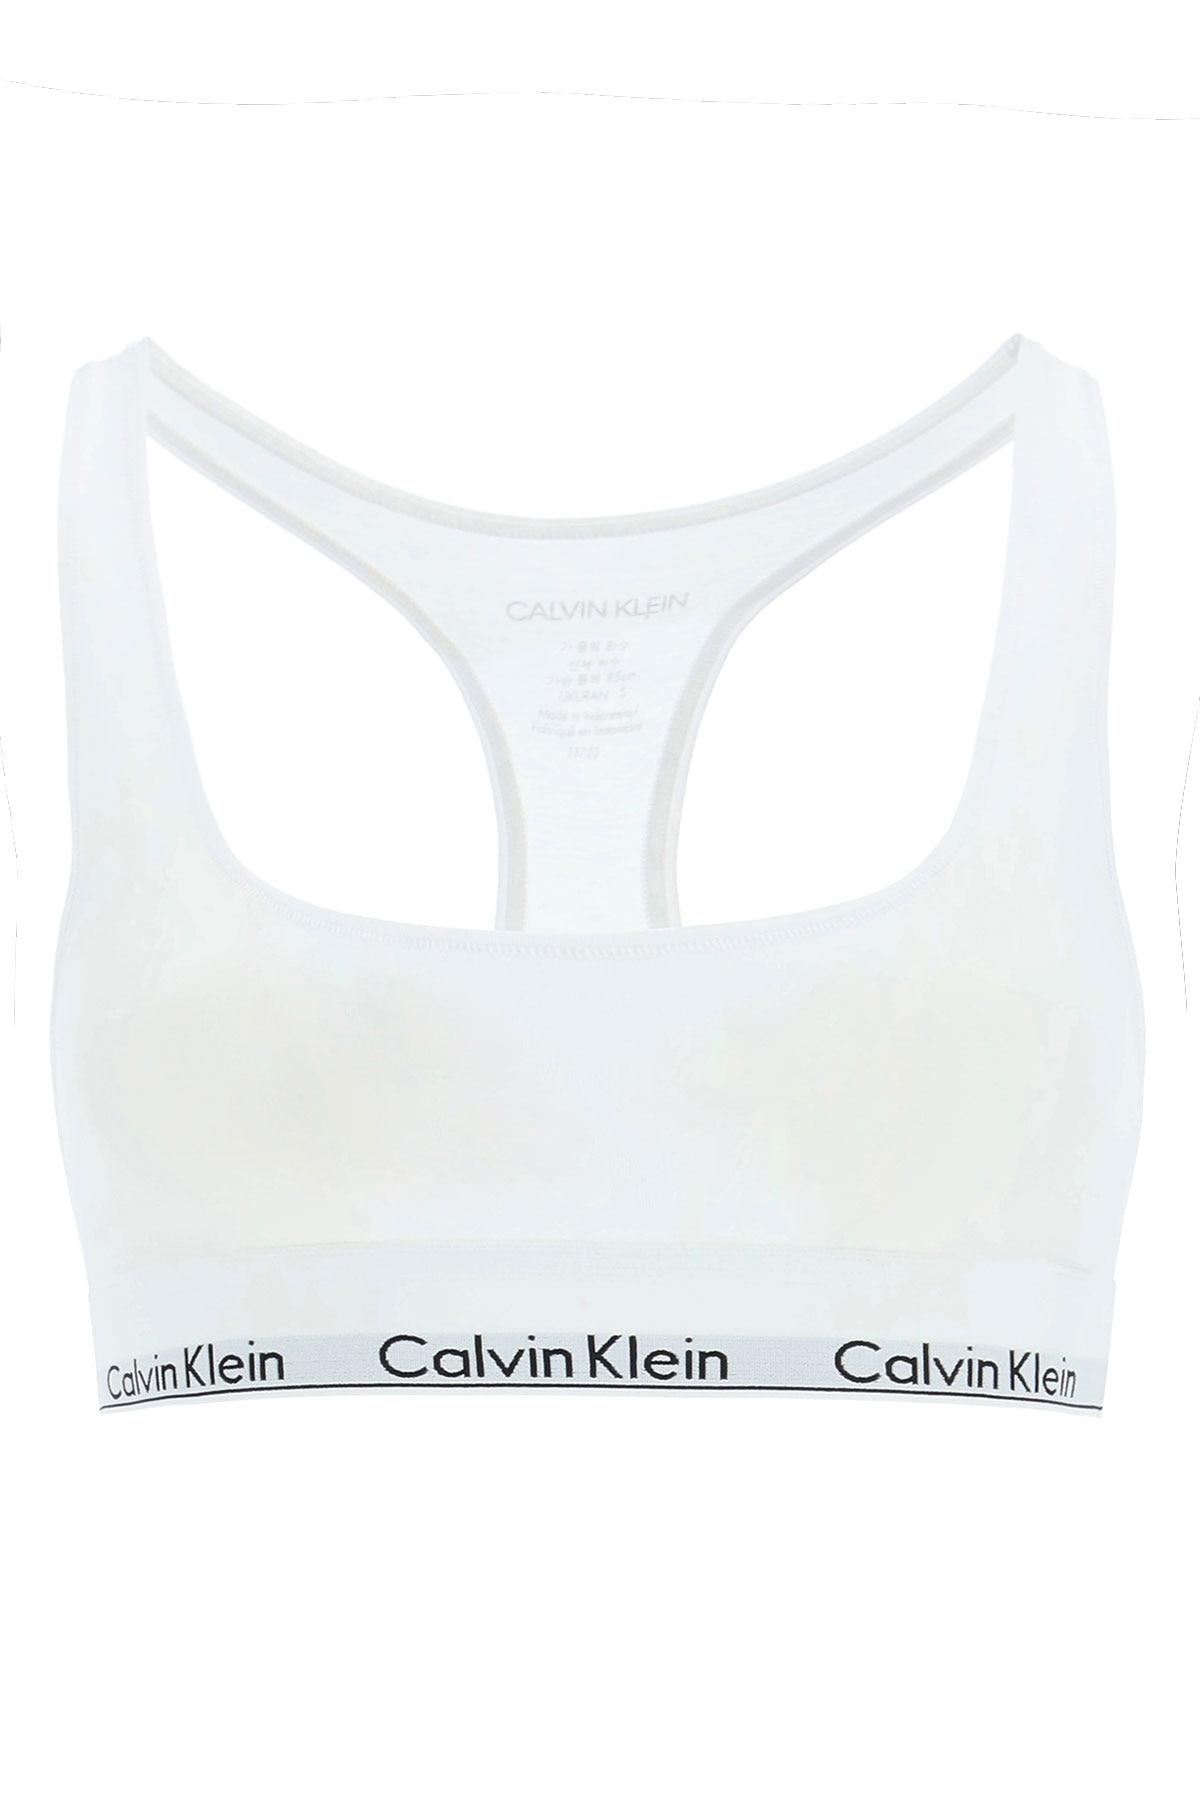 Calvin Klein Cotton Sports Bra With Branded Border in White (White) (White)  - Save 59% | Lyst